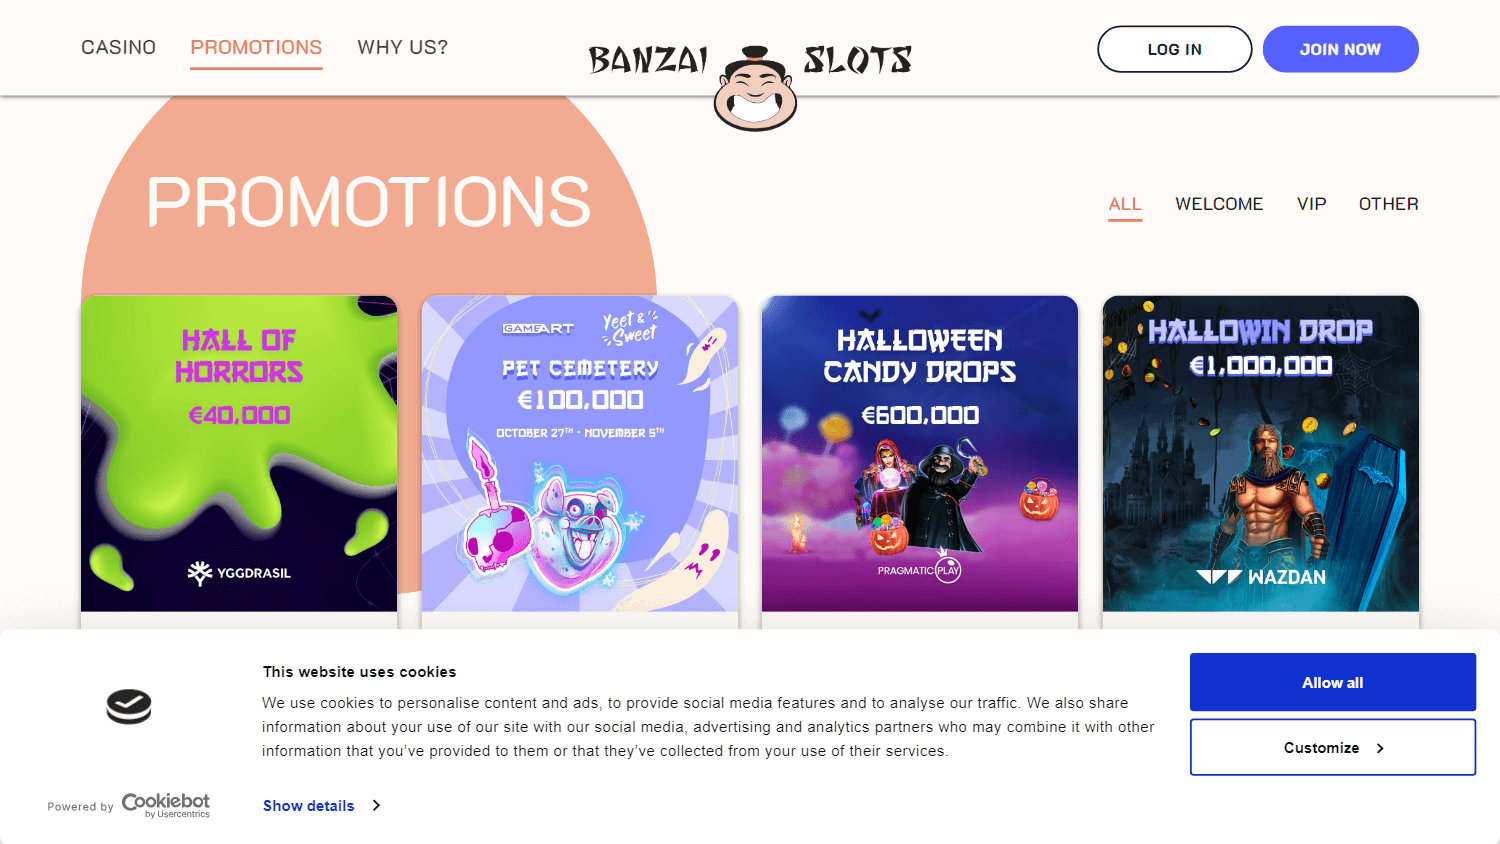 banzaislots_casino_promotions_desktop